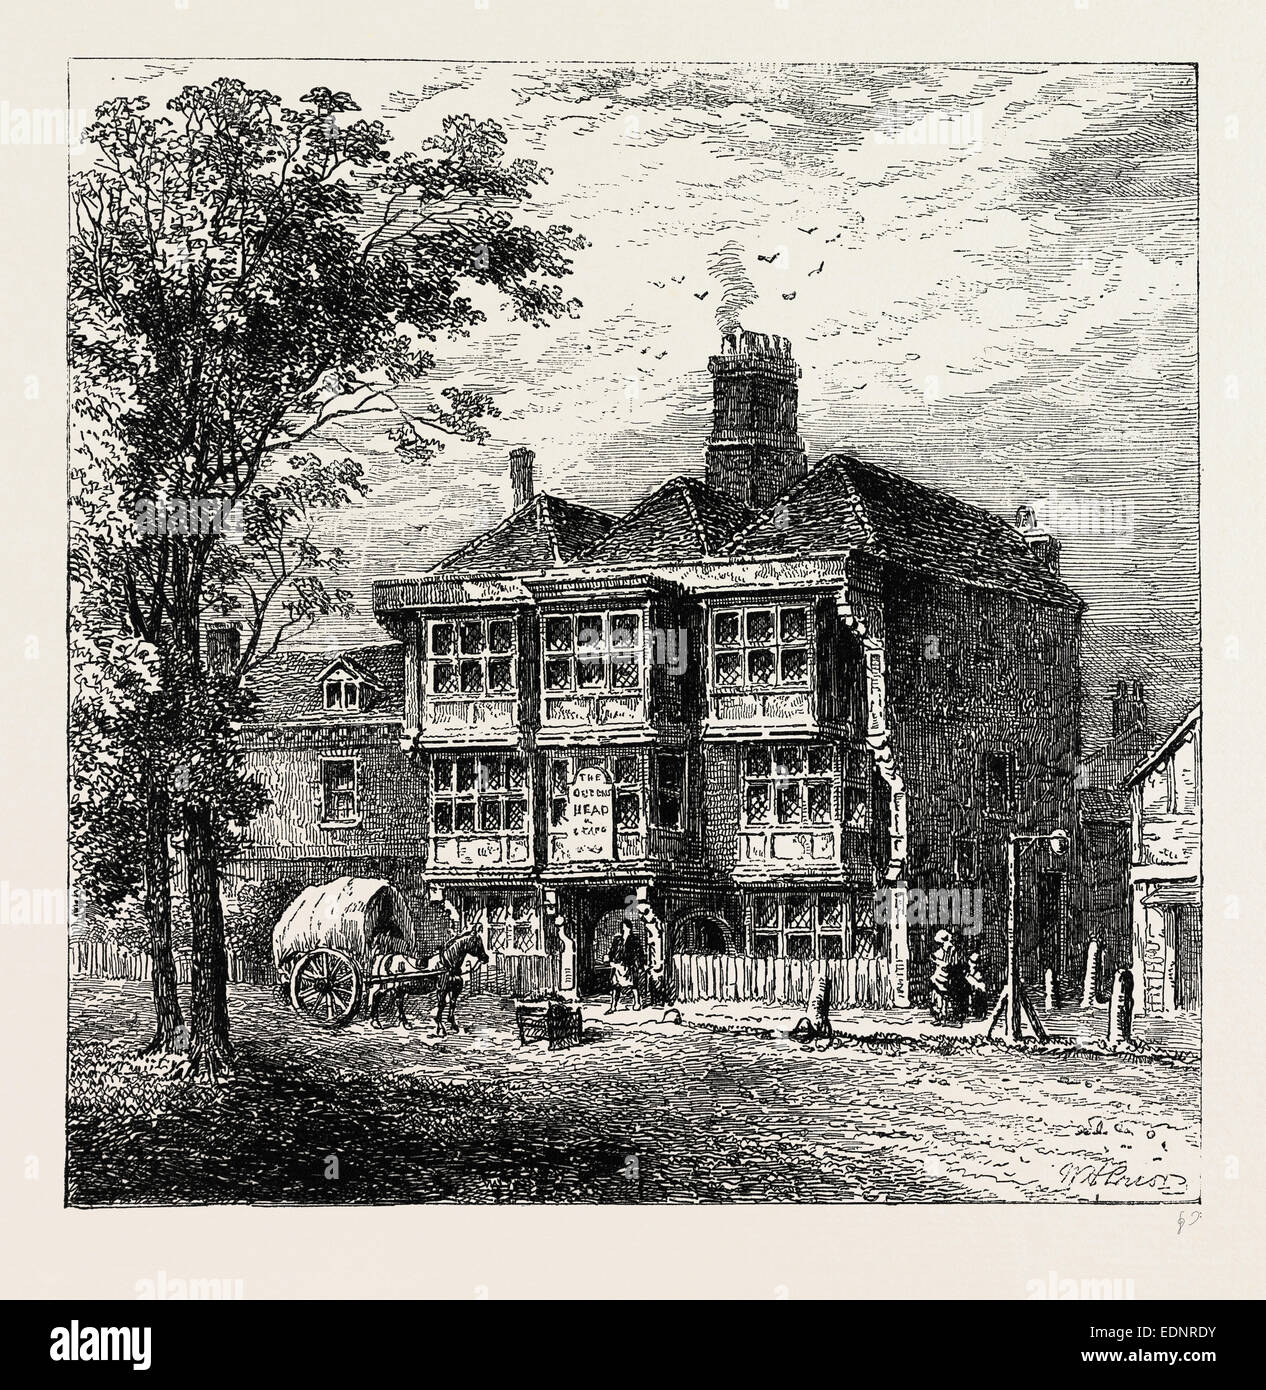 DIE ALTE KÖNIGIN KOPF TAVERNE. London, UK, 19. Jahrhundert Stockfoto